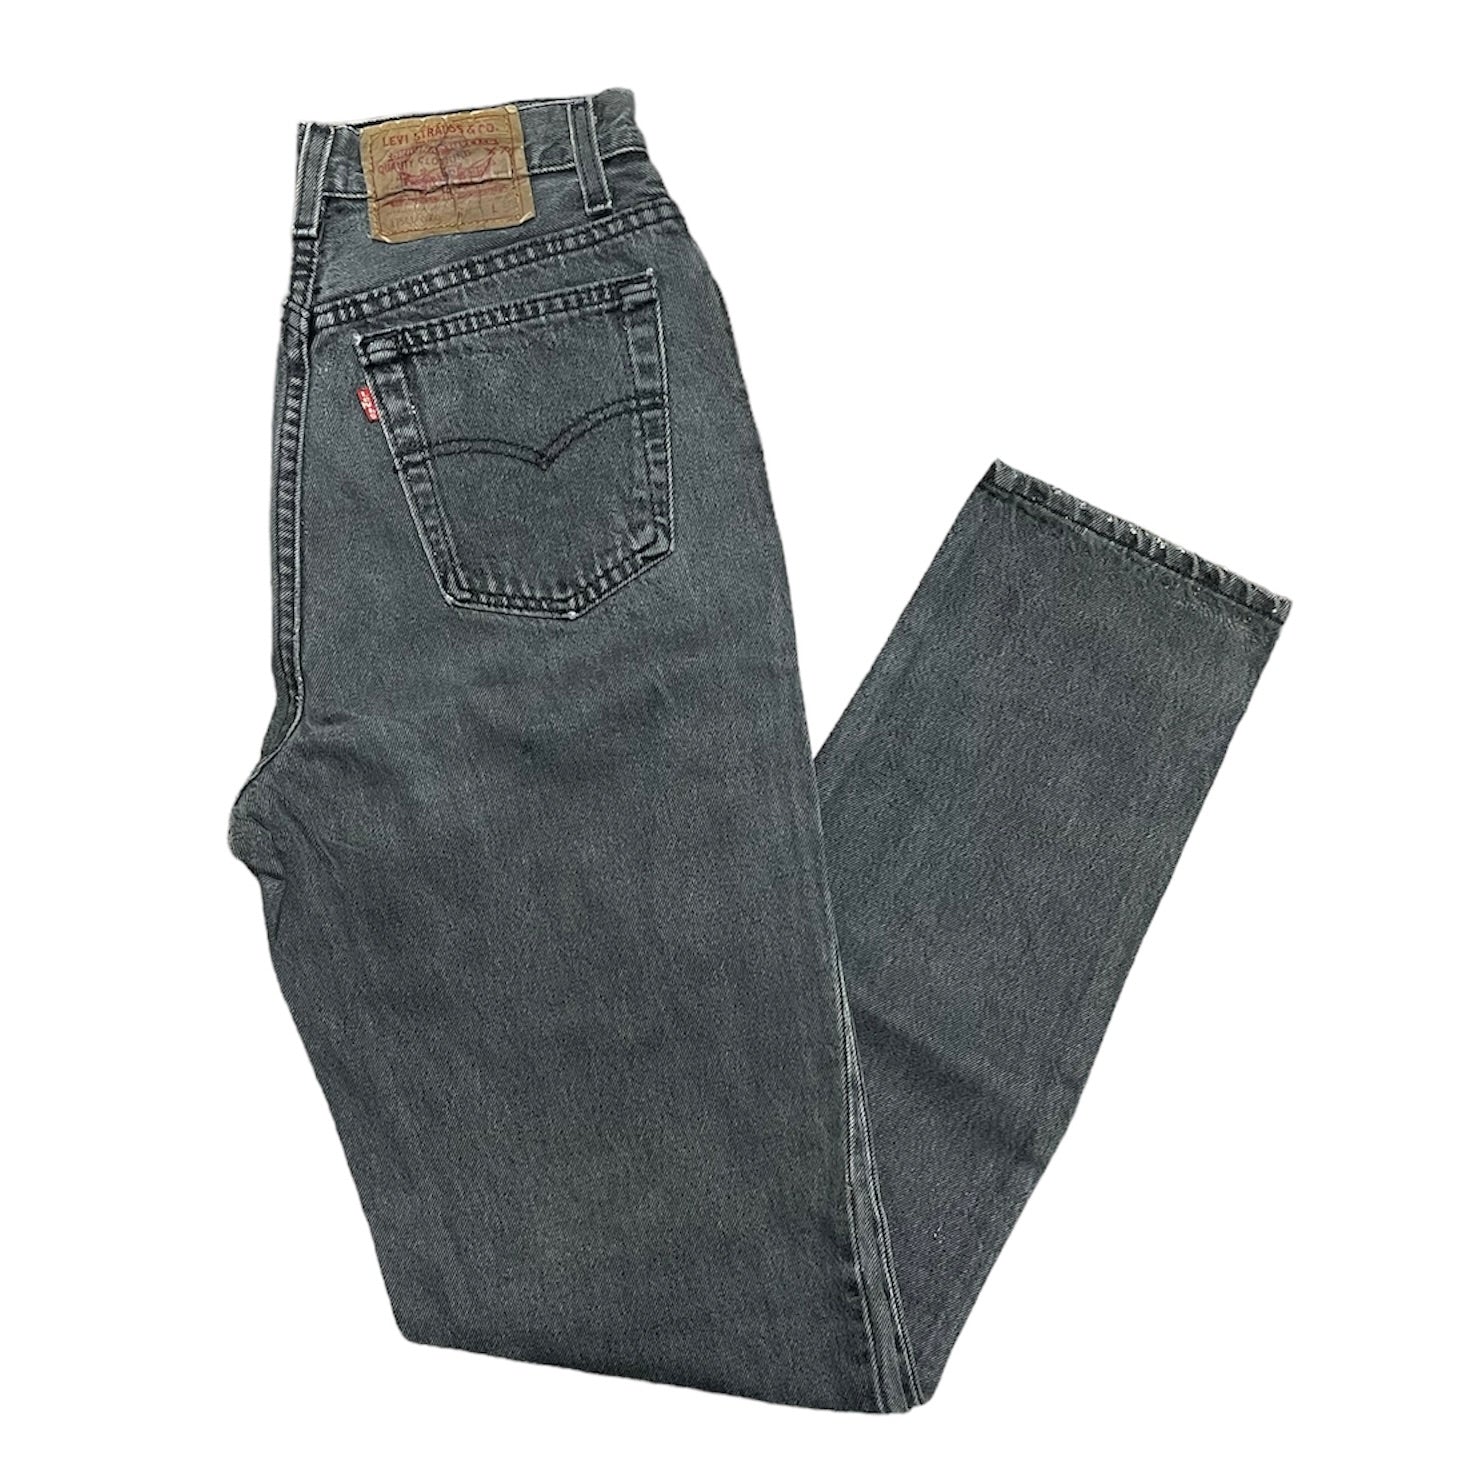 Vintage Levis 501 Vintage Black/Grey Jeans (W27)